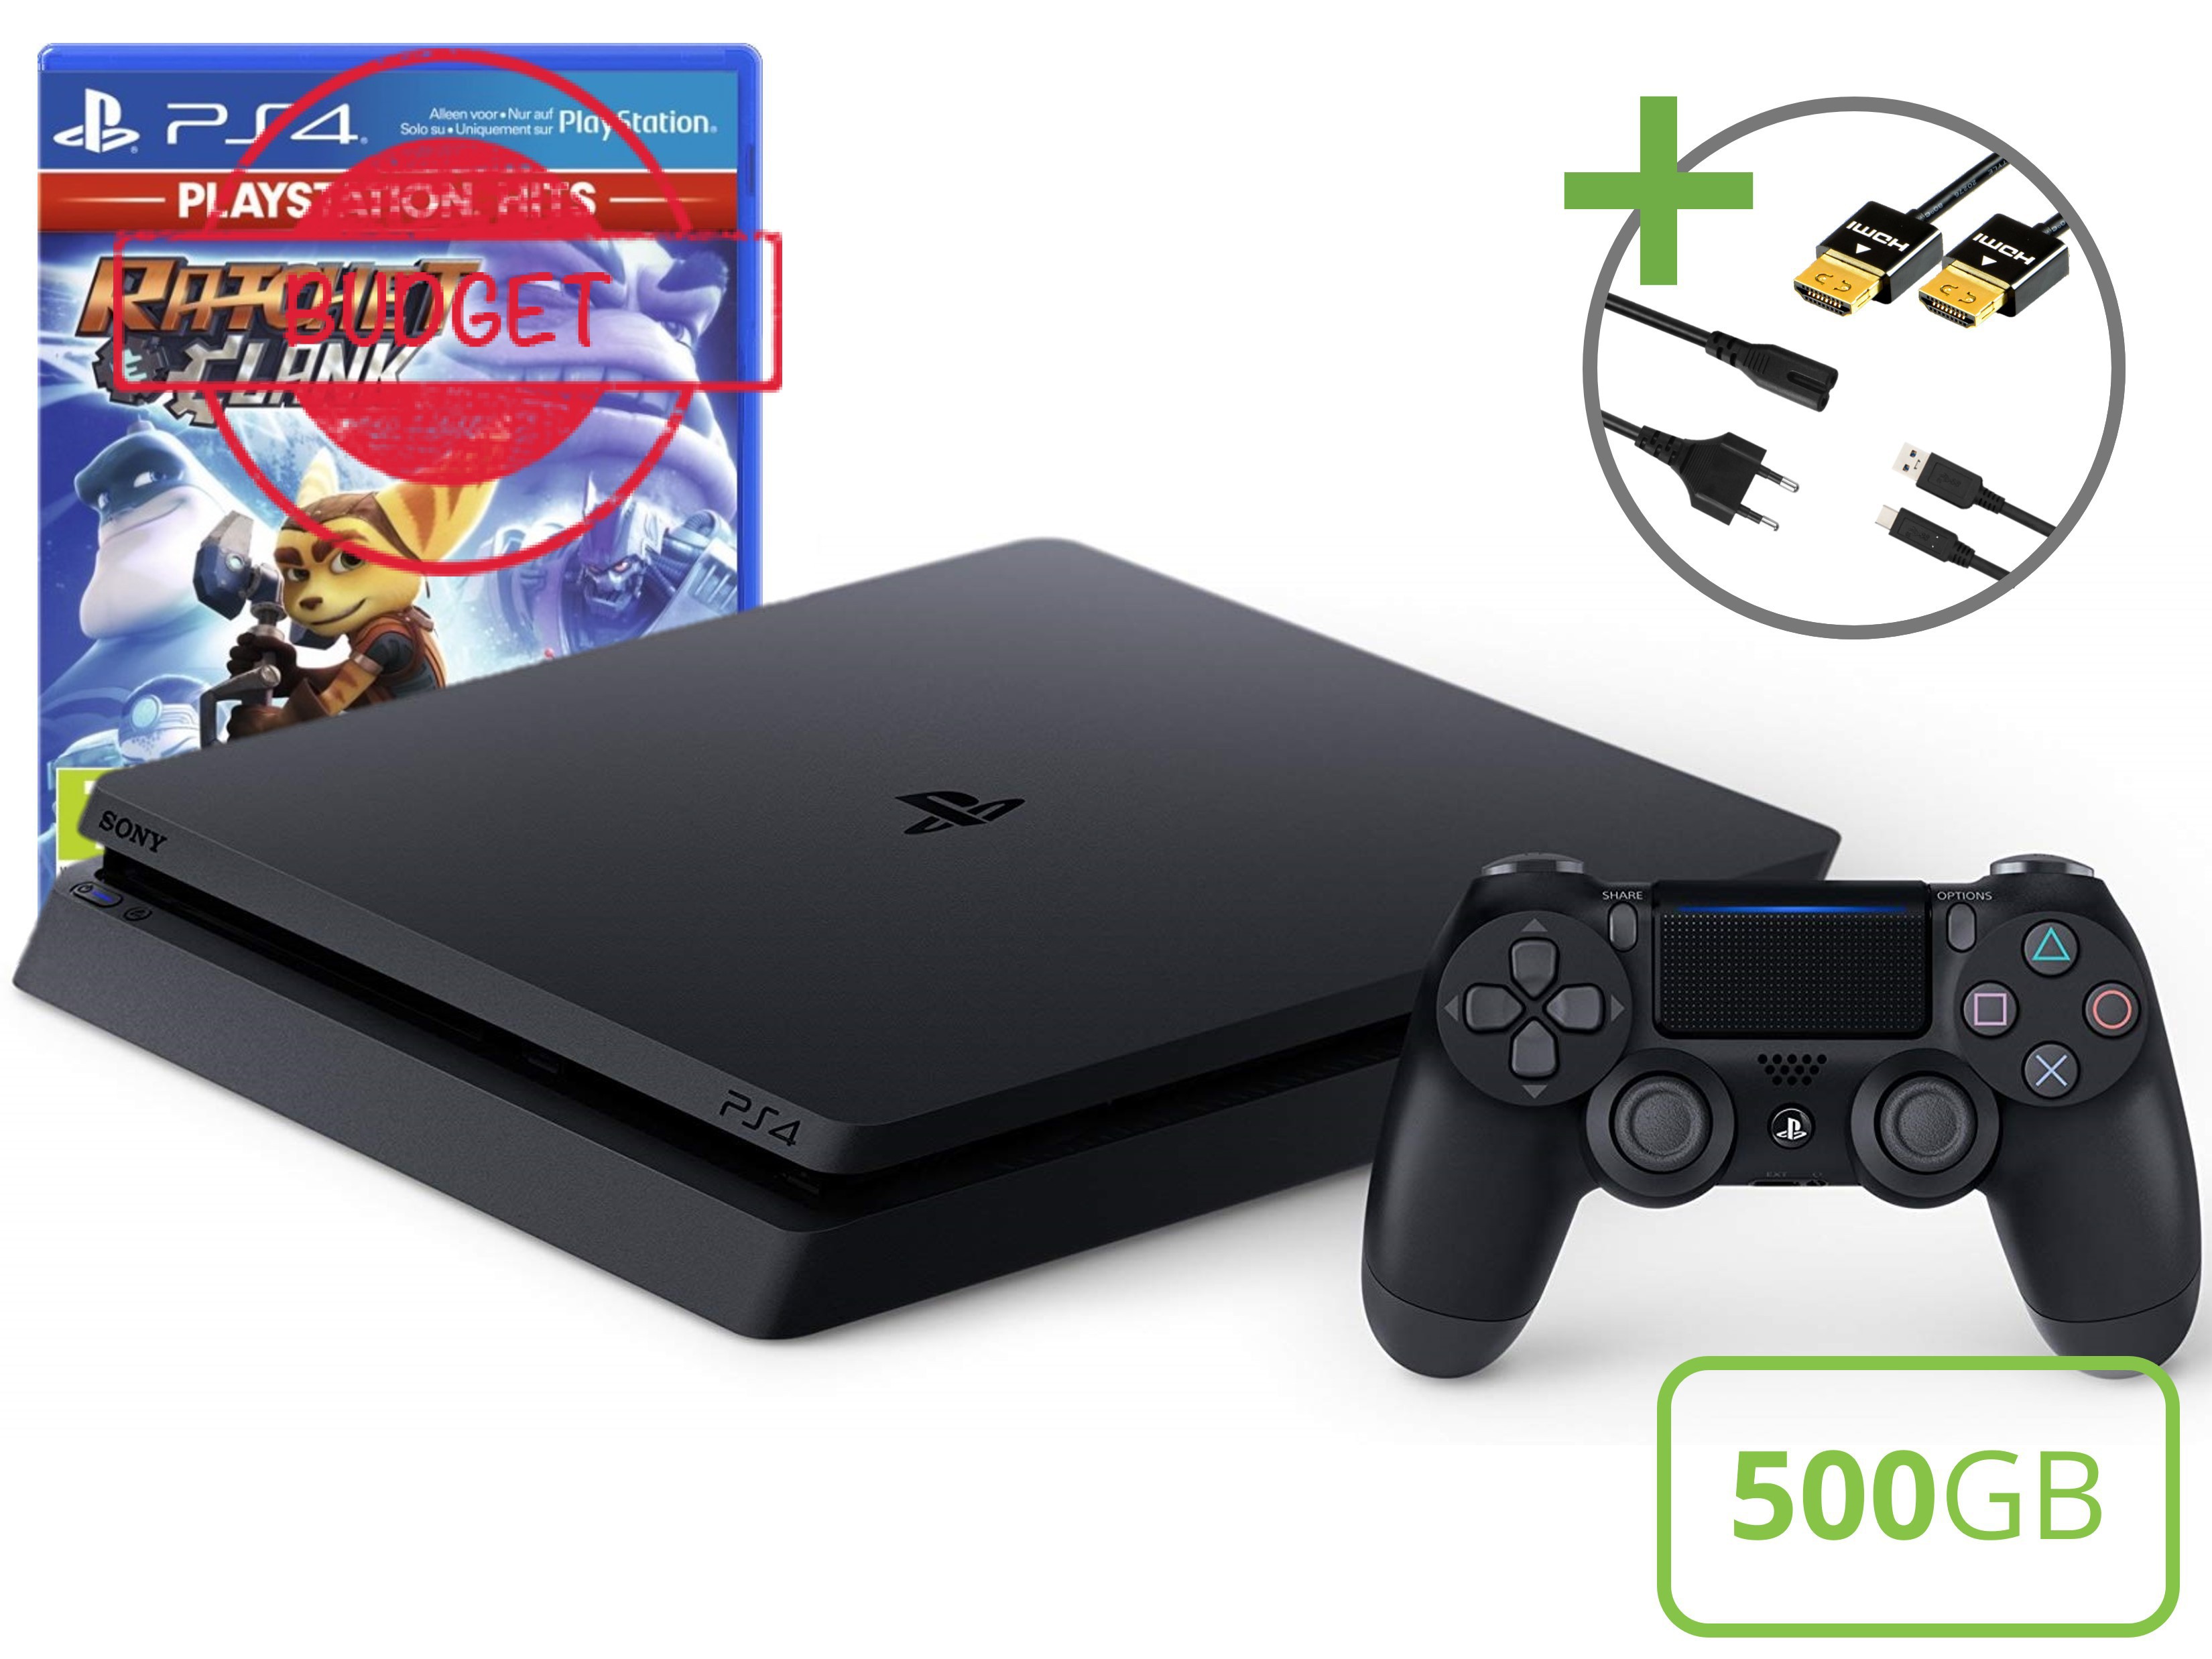 Sony PlayStation 4 Slim Starter Pack - 500GB Ratchet & Clank Edition - Budget Kopen | Playstation 4 Hardware